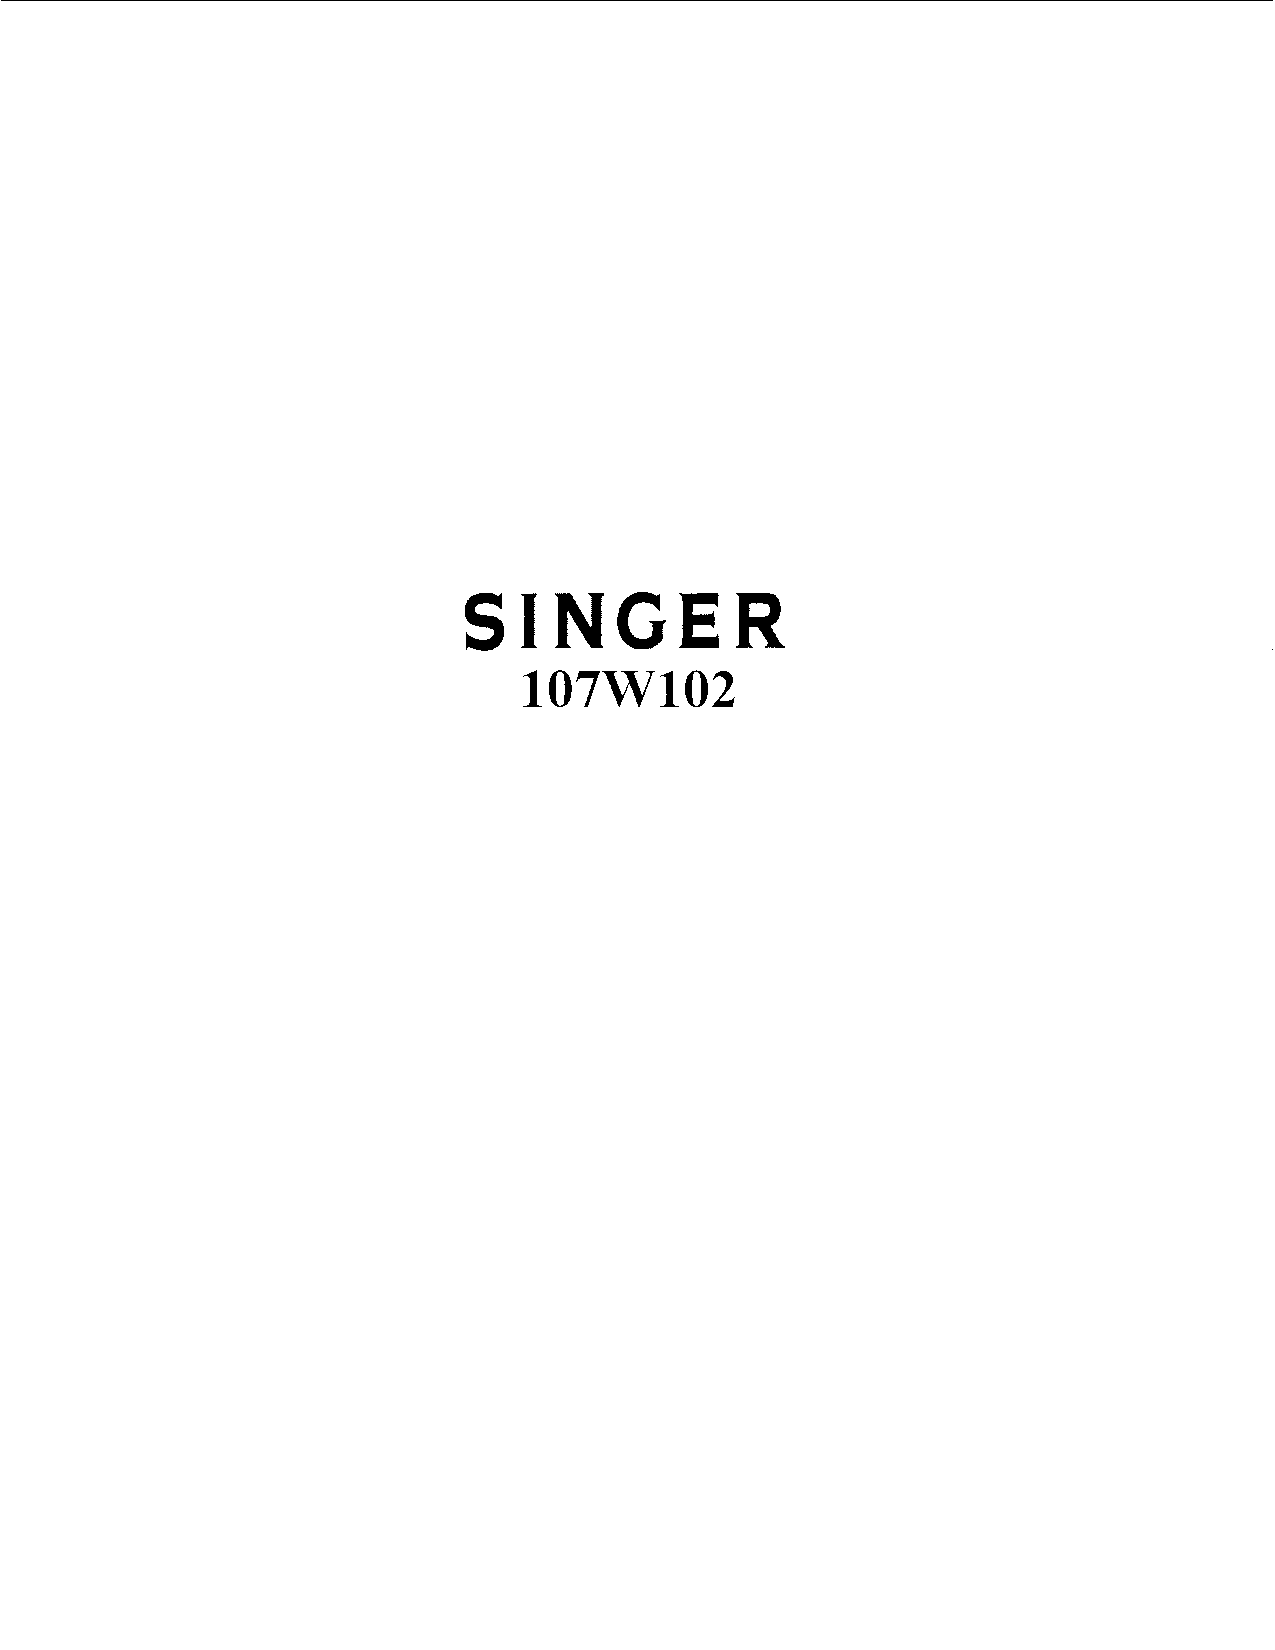 Singer 107W102 User Manual